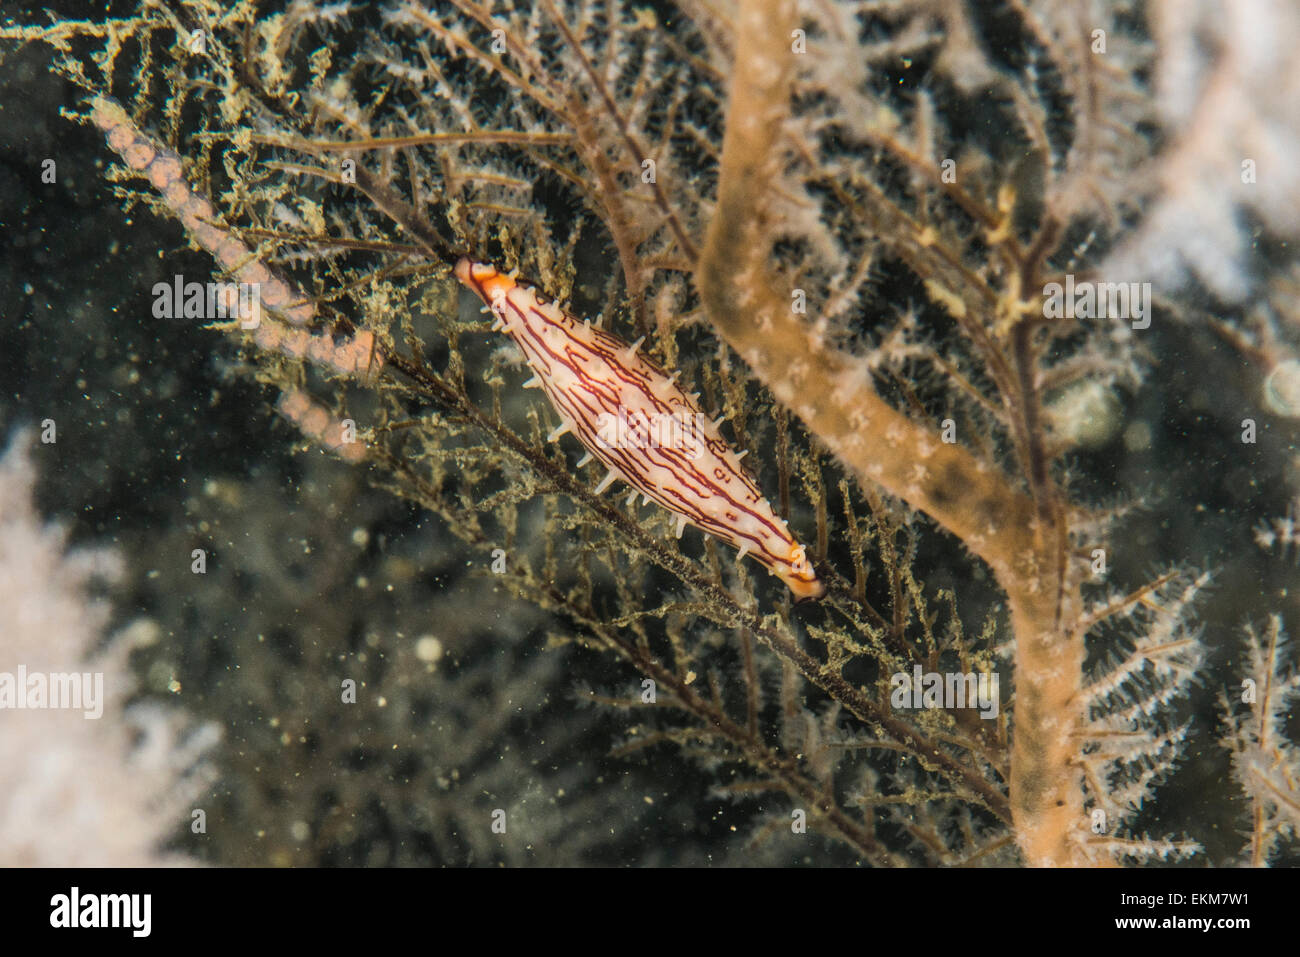 Allied cowrie (Phenacovolva subreflexa) on the sea fan. about 1cm long. Owase,  Mie, Japan Stock Photo